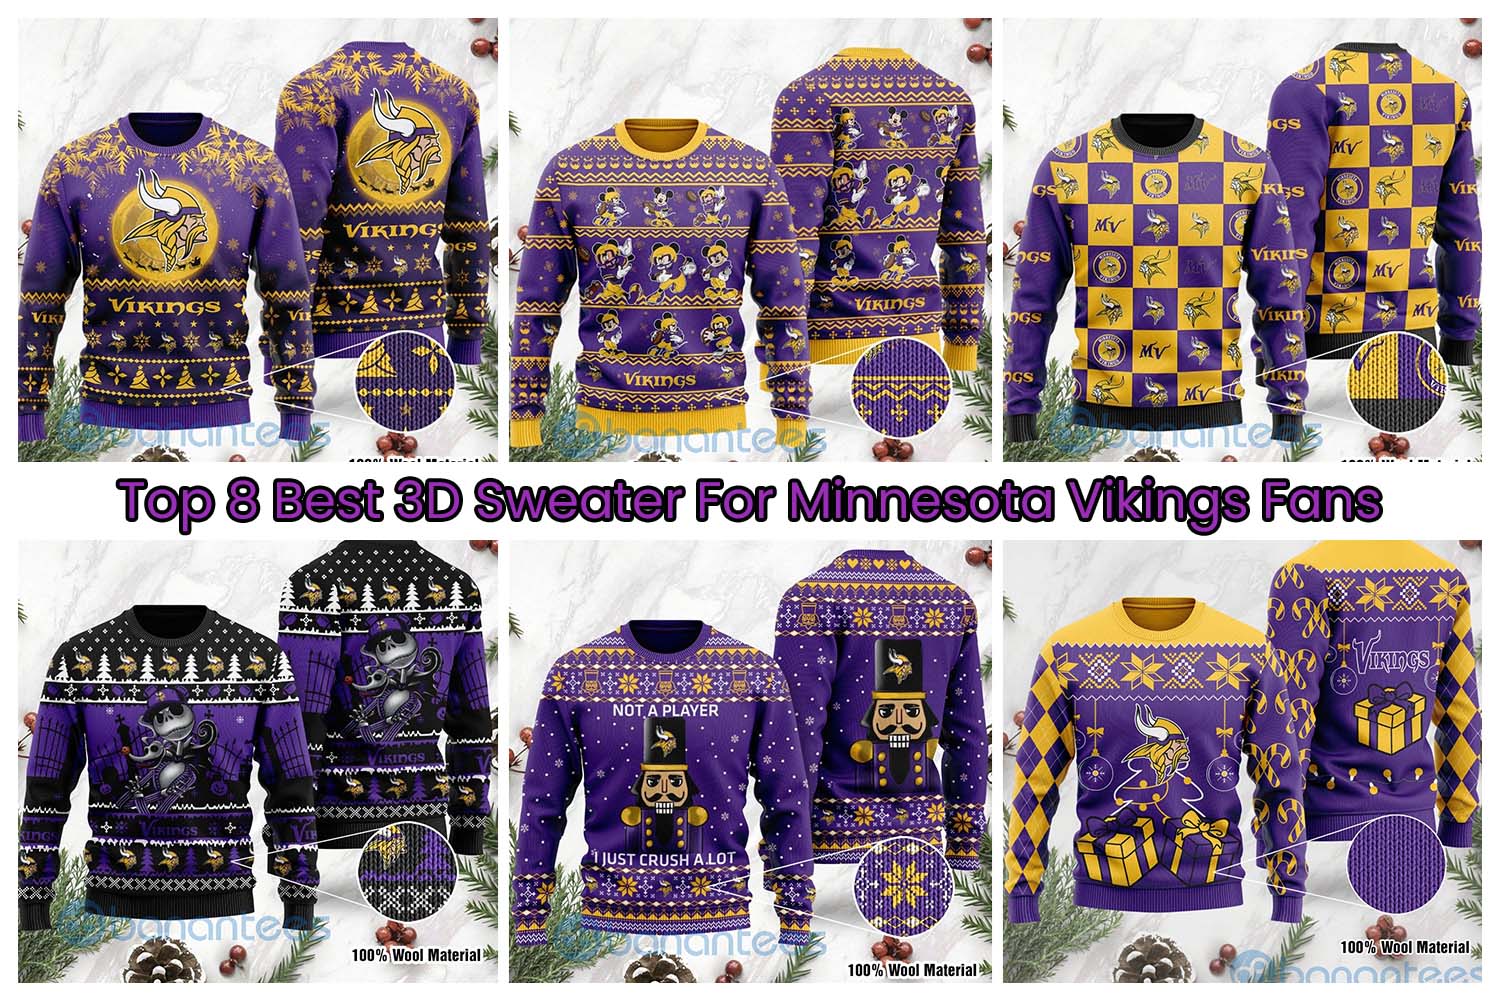 Top 8 Best 3D Sweater For Minnesota Vikings Fans